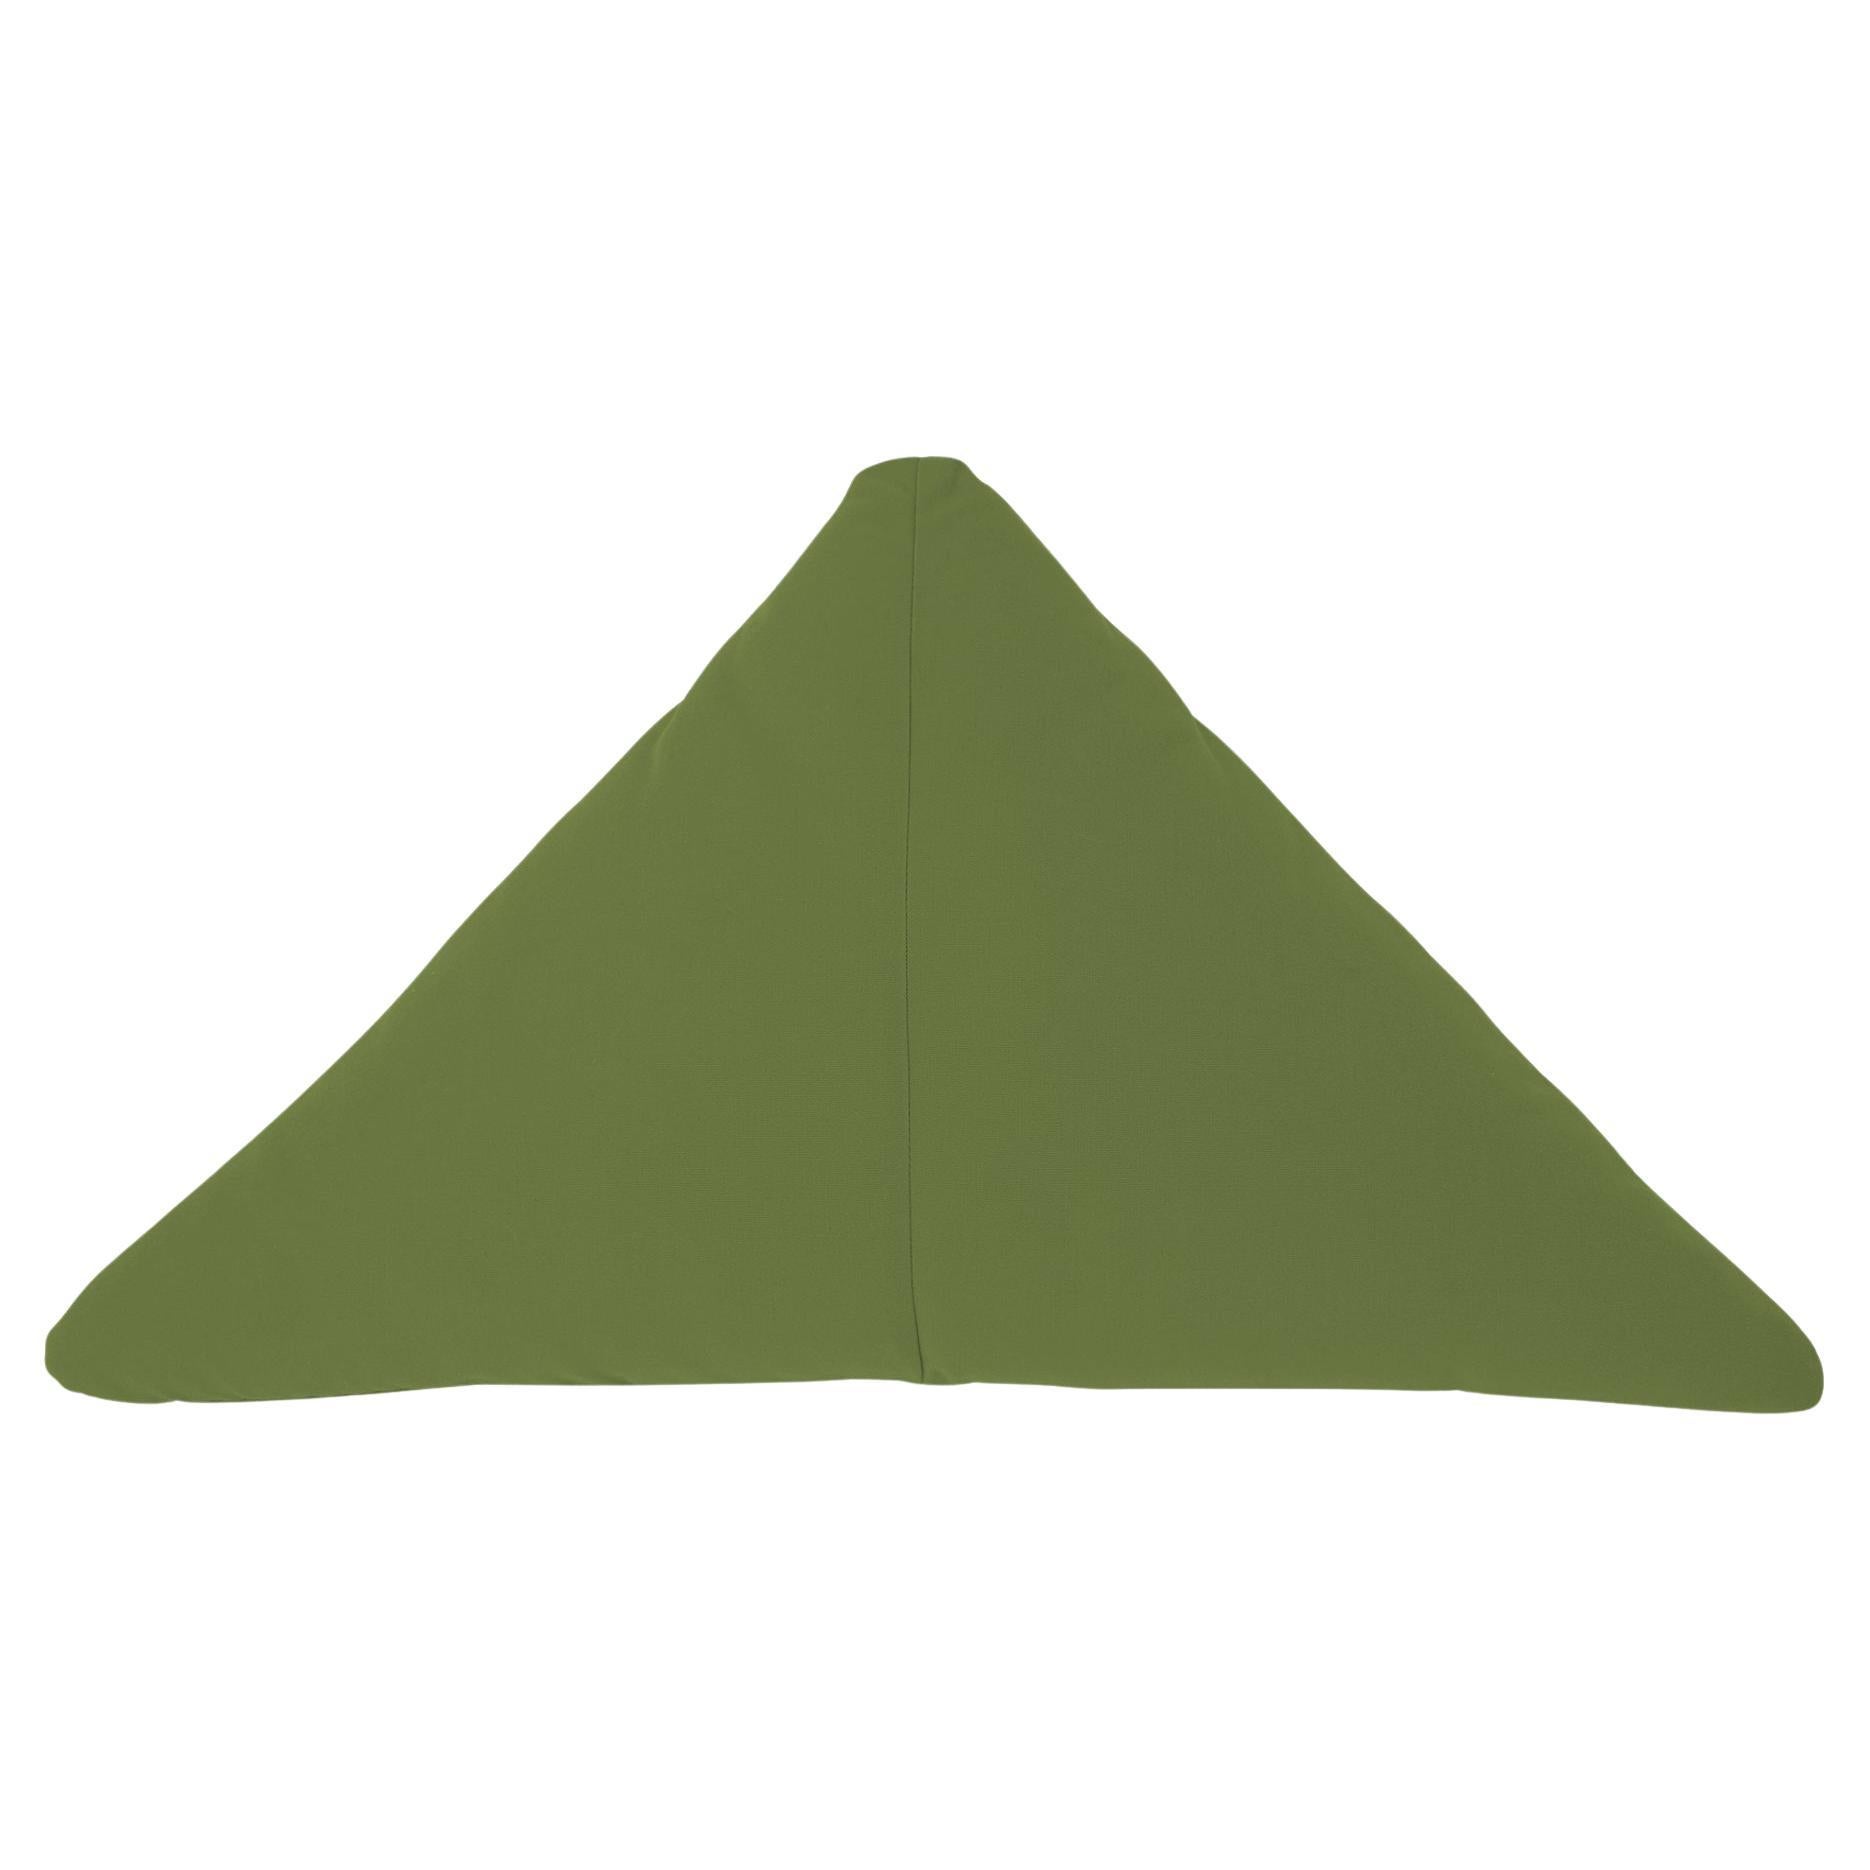 Bend Goods - Coussin triangulaire en Sunbrella palmier